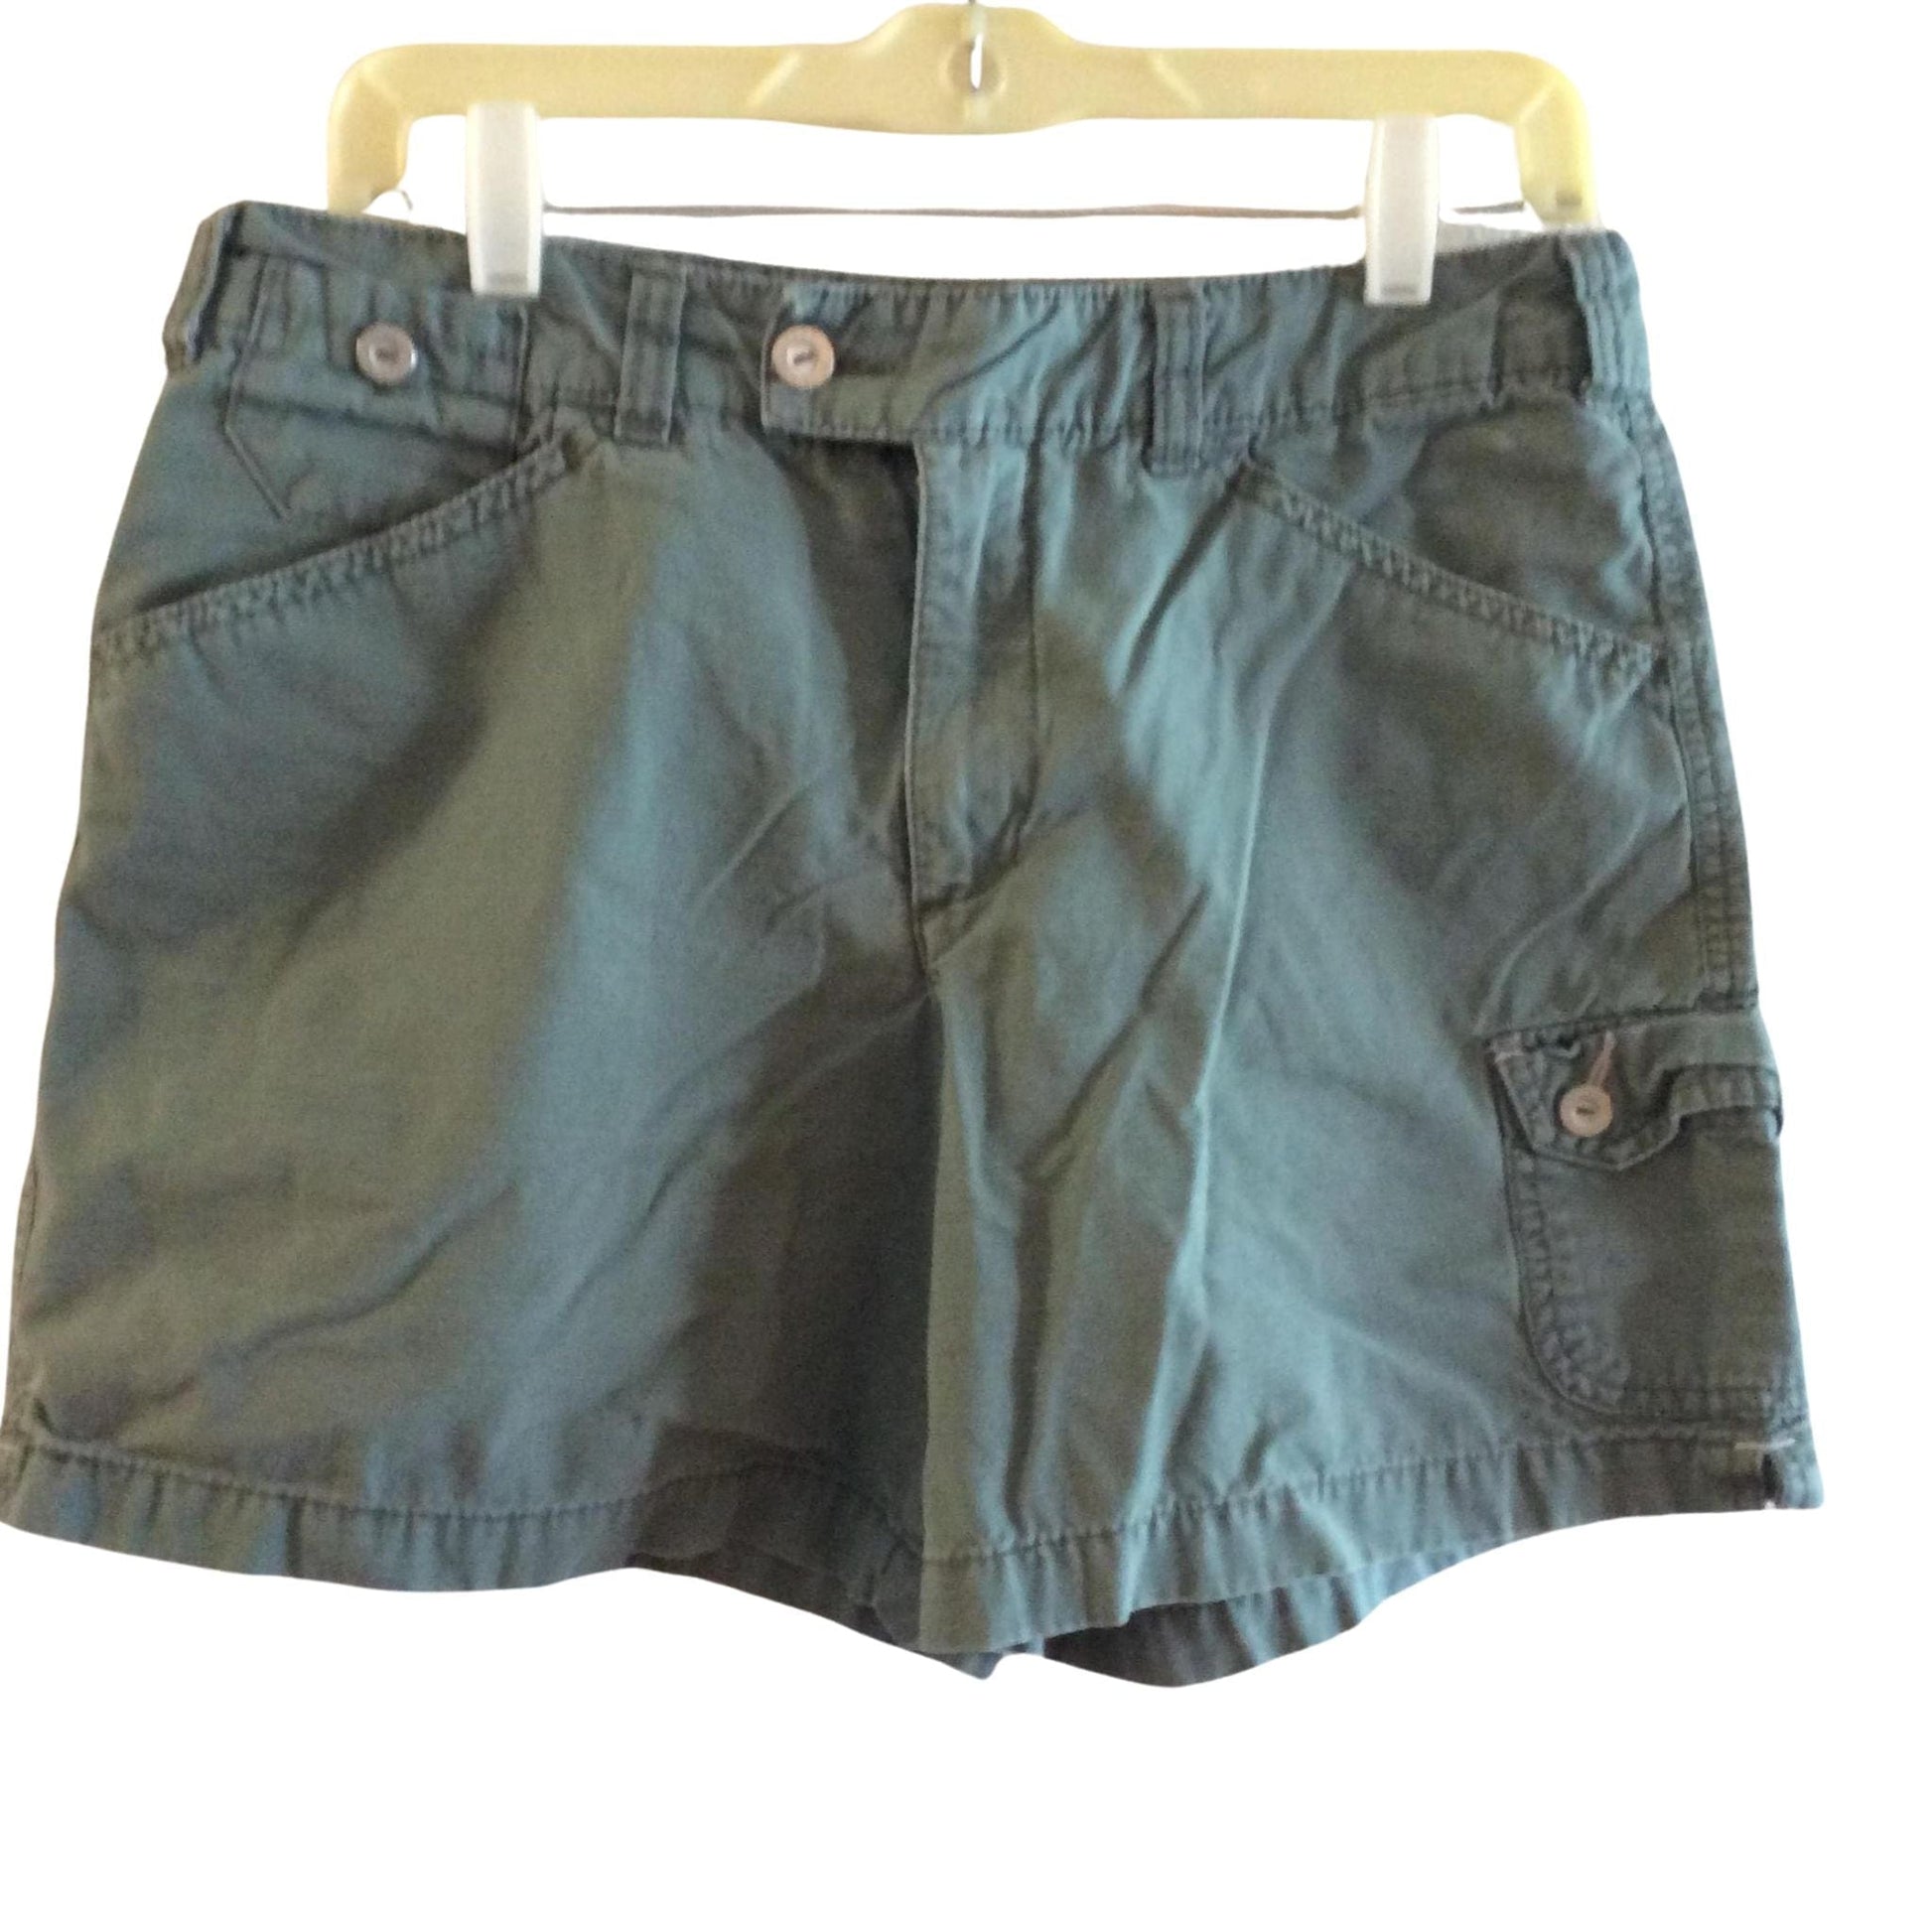 Retro Cotton Shorts Small / Green / Vintage 1980s